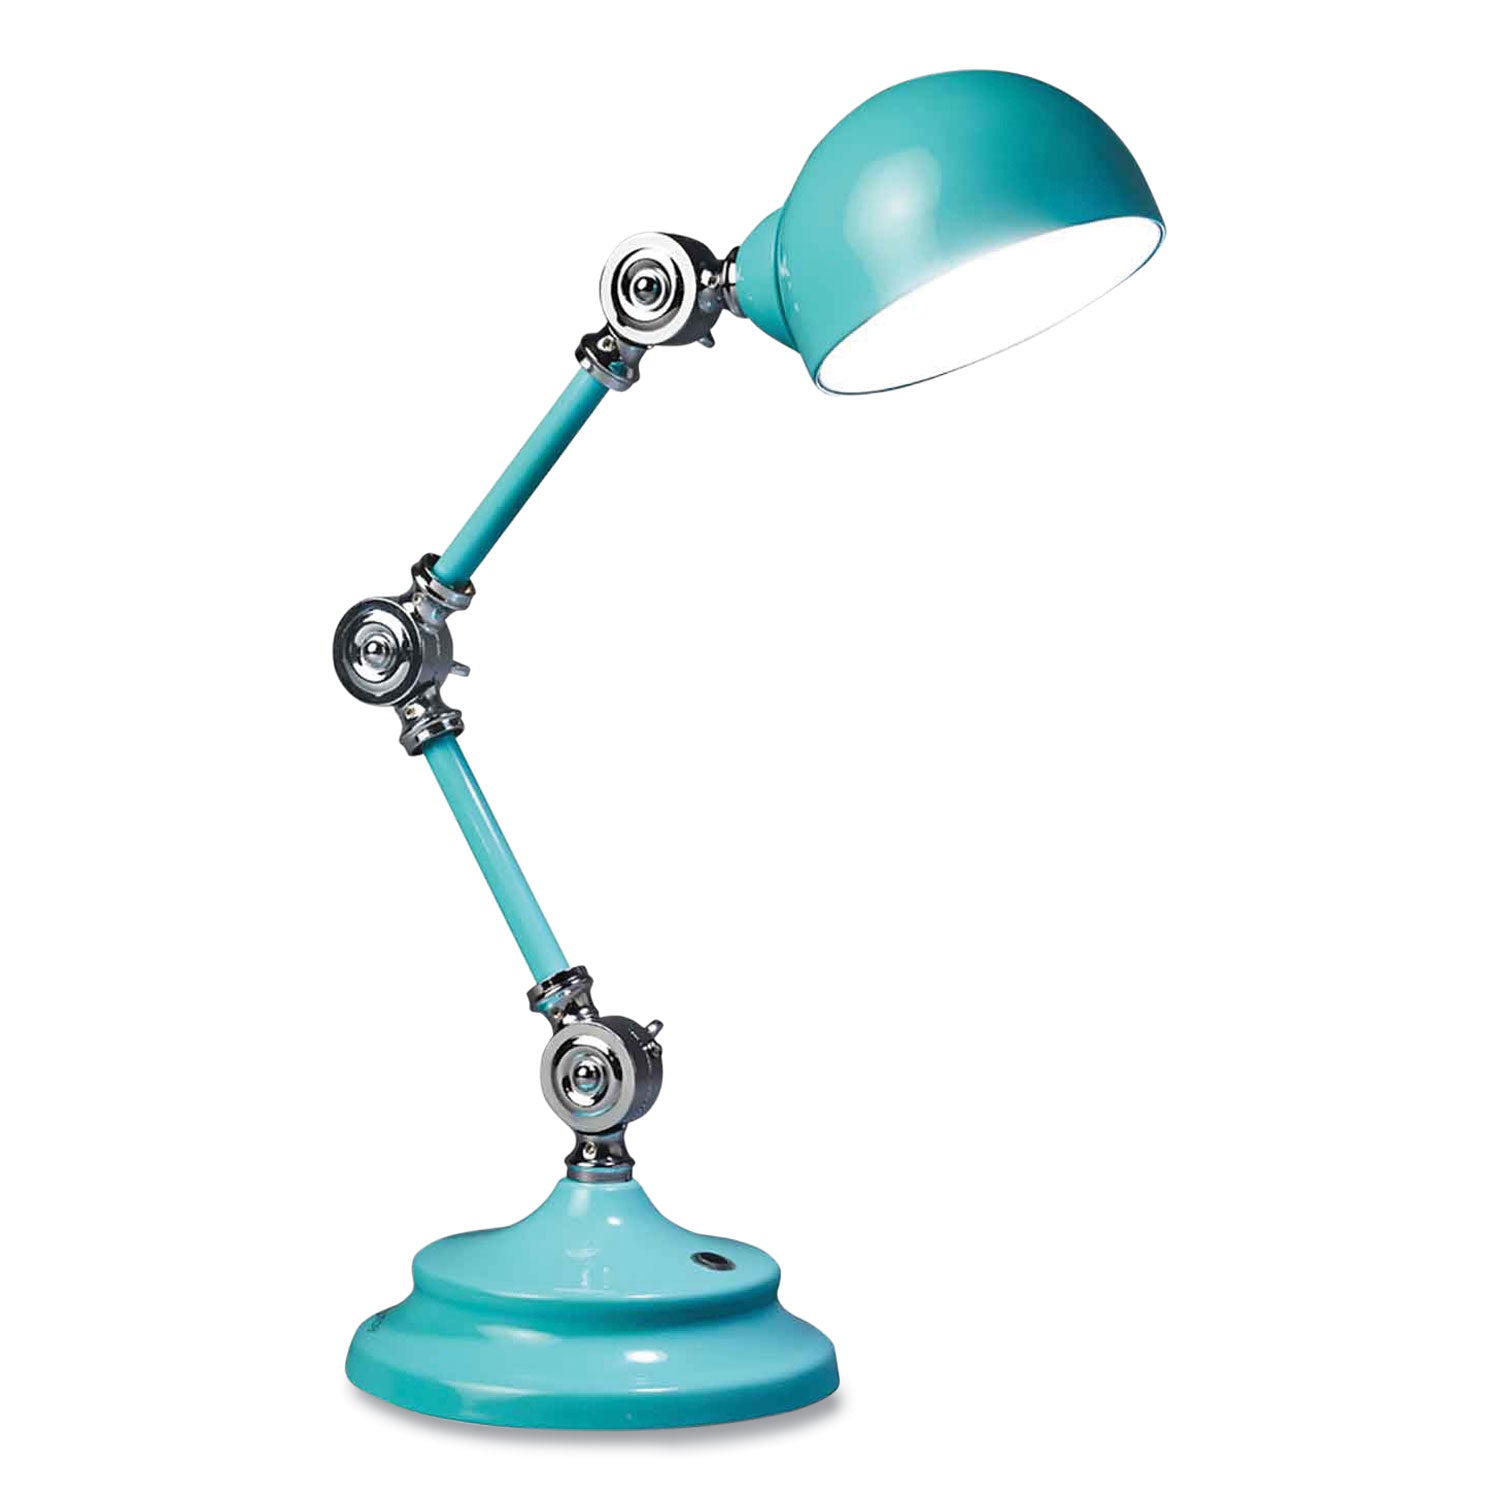 wellness-series-revive-led-desk-lamp-155-high-turquoise-ships-in-4-6-business-days_ottf1485tu9shpr - 1